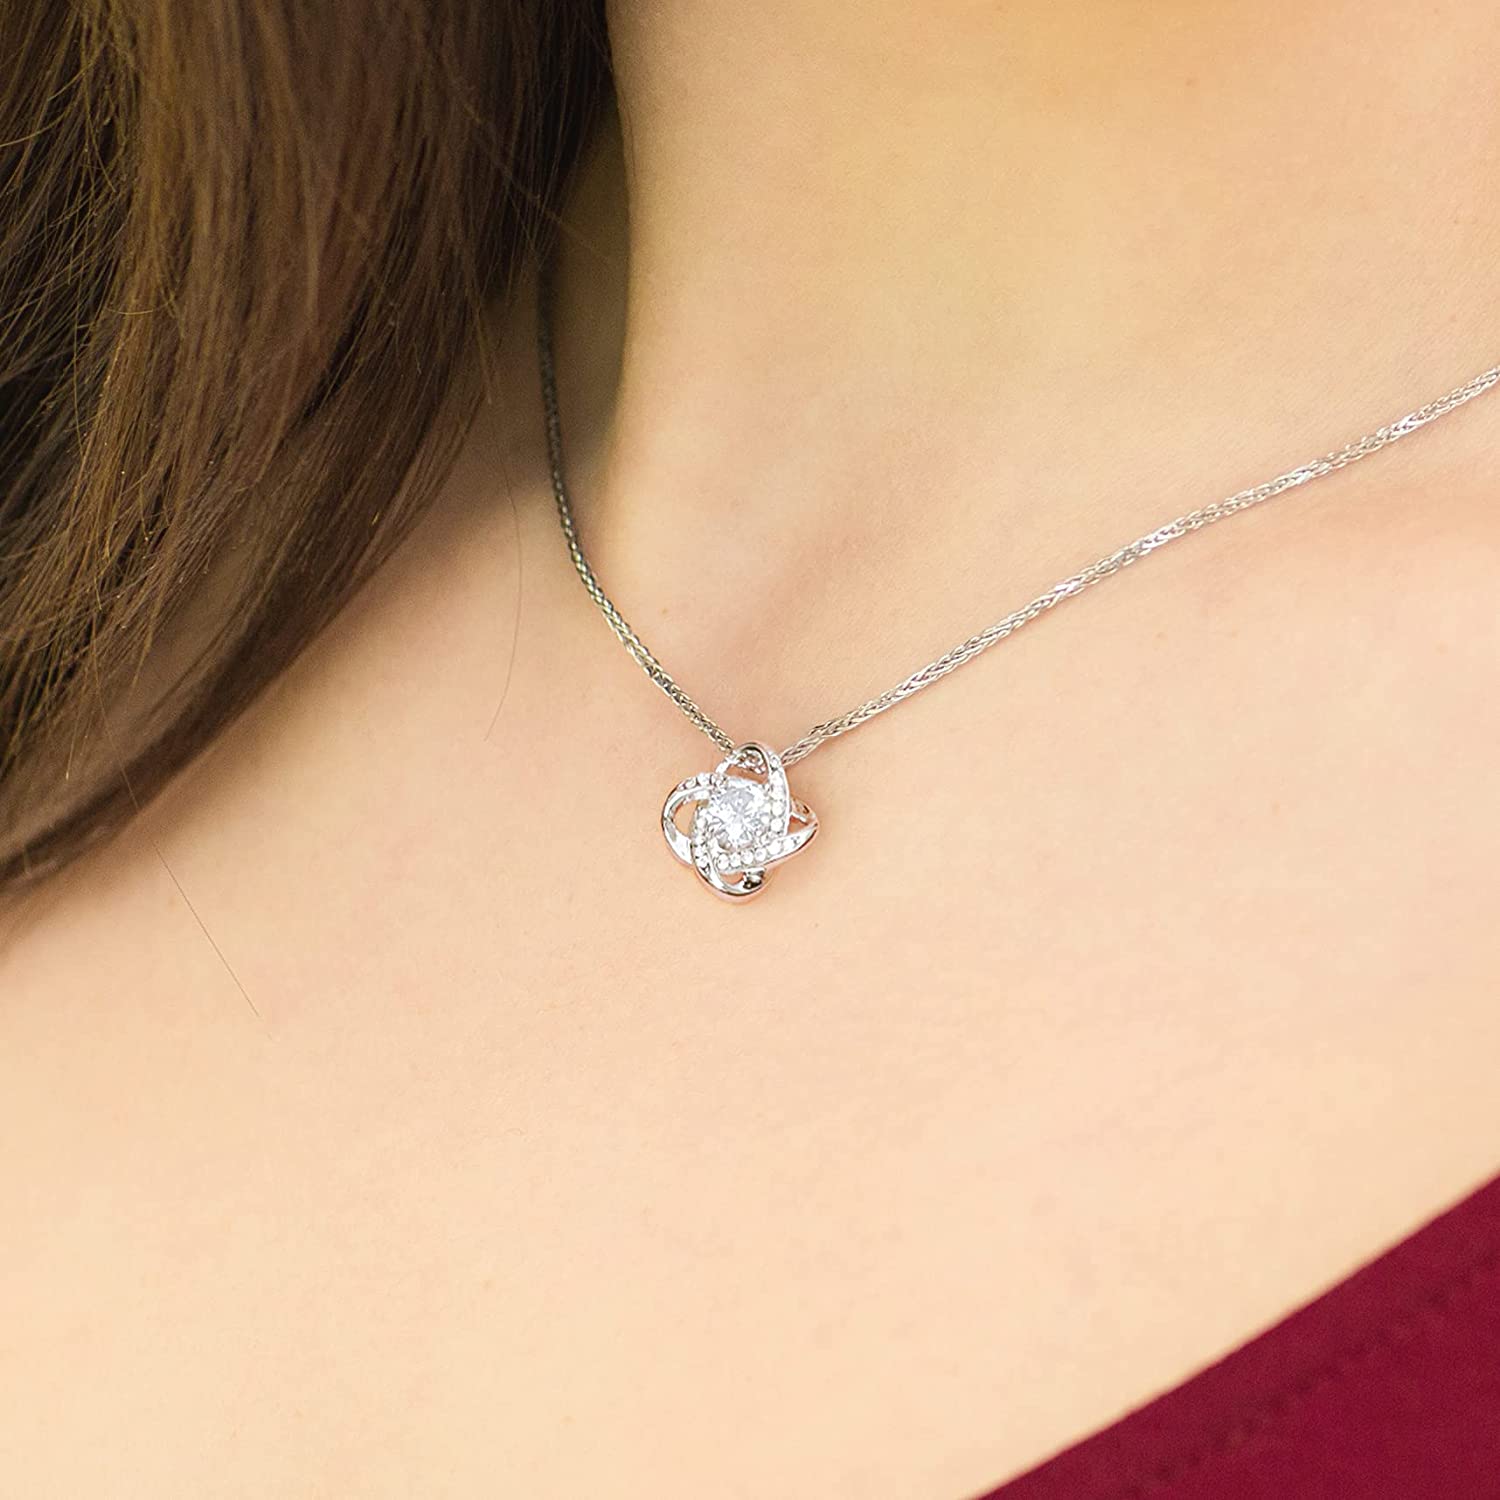 Mom Necklace, Necklace For Nurse Mom “ Nurse Mom Gift For Nurse Mom Gifts for Mother (Mom) Rakva